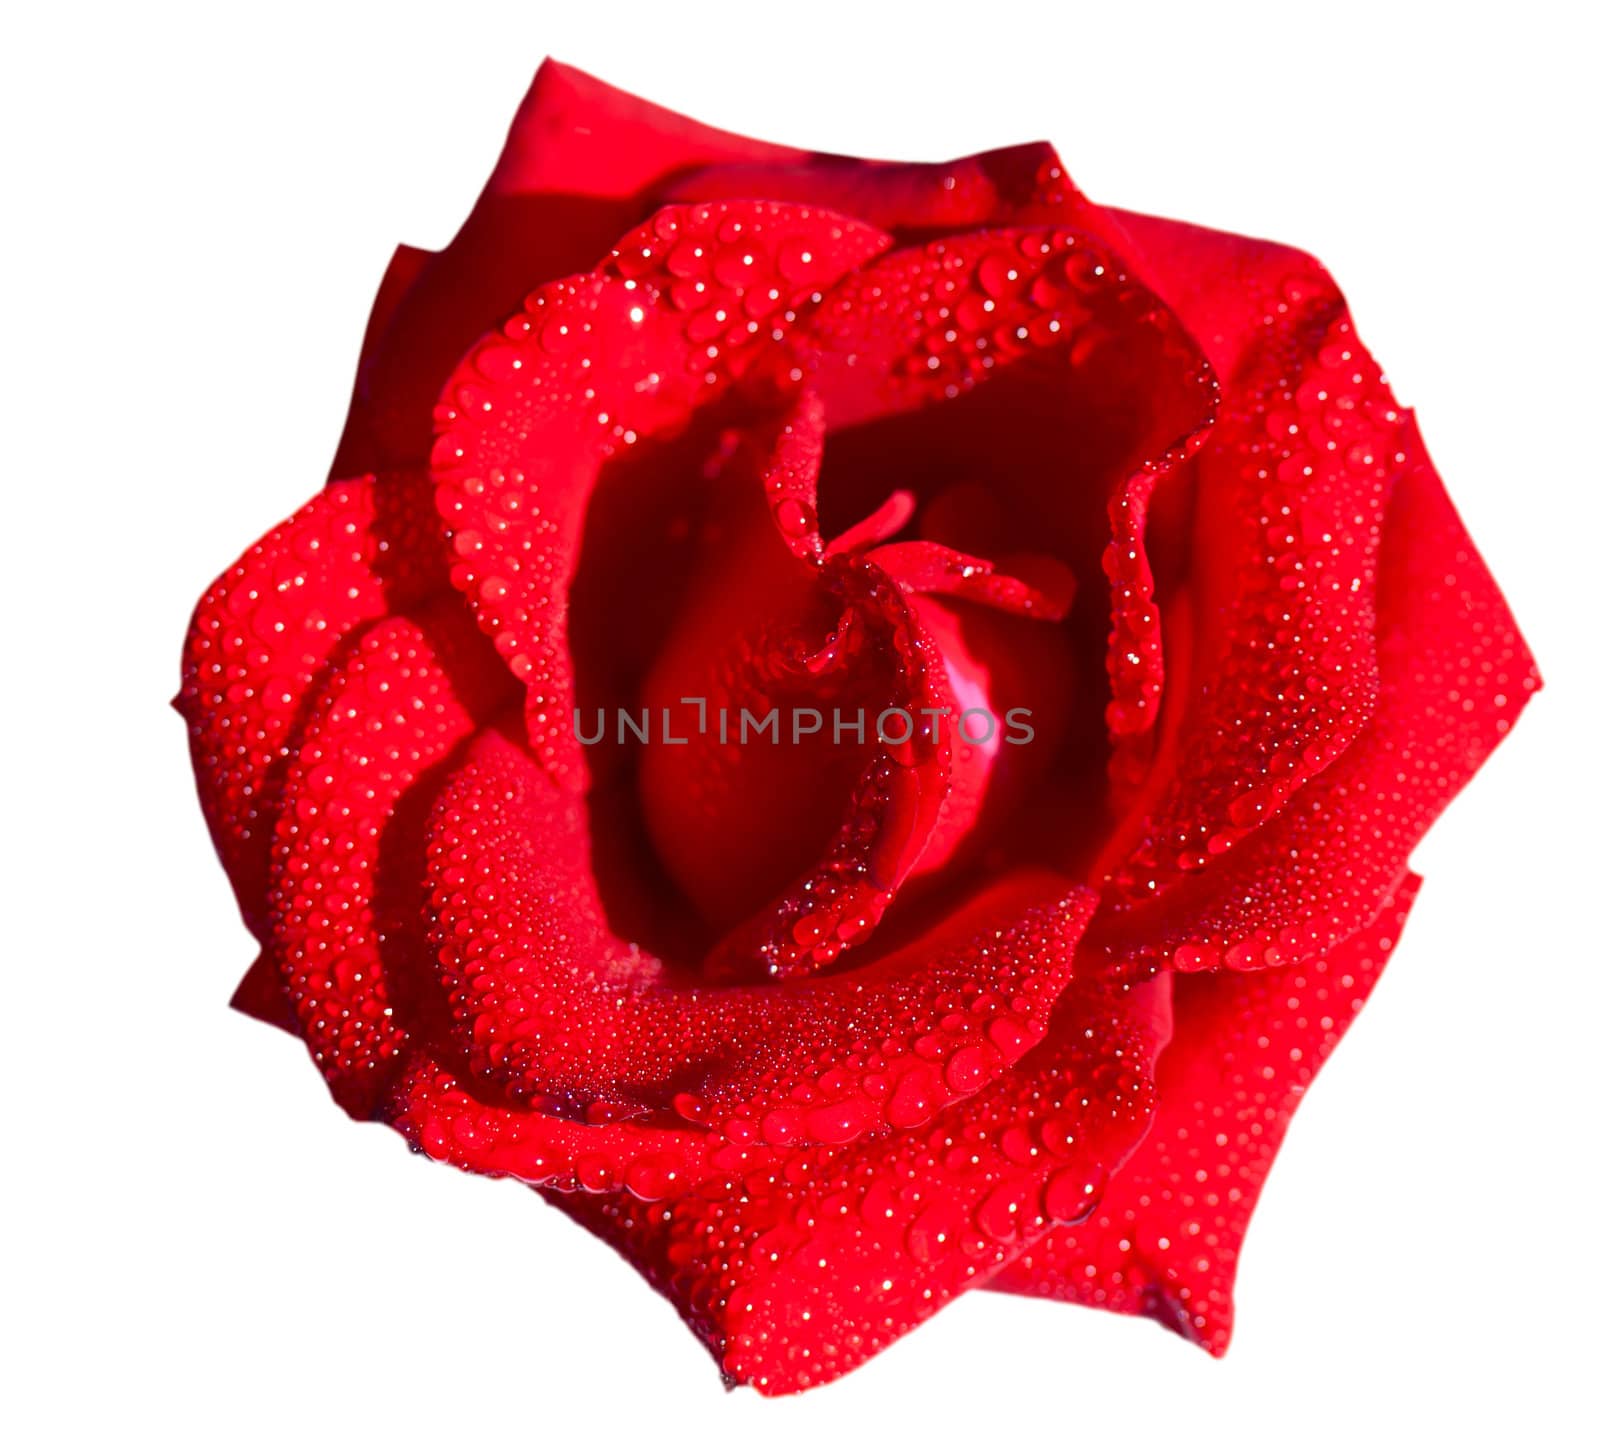 Red rose by vtorous